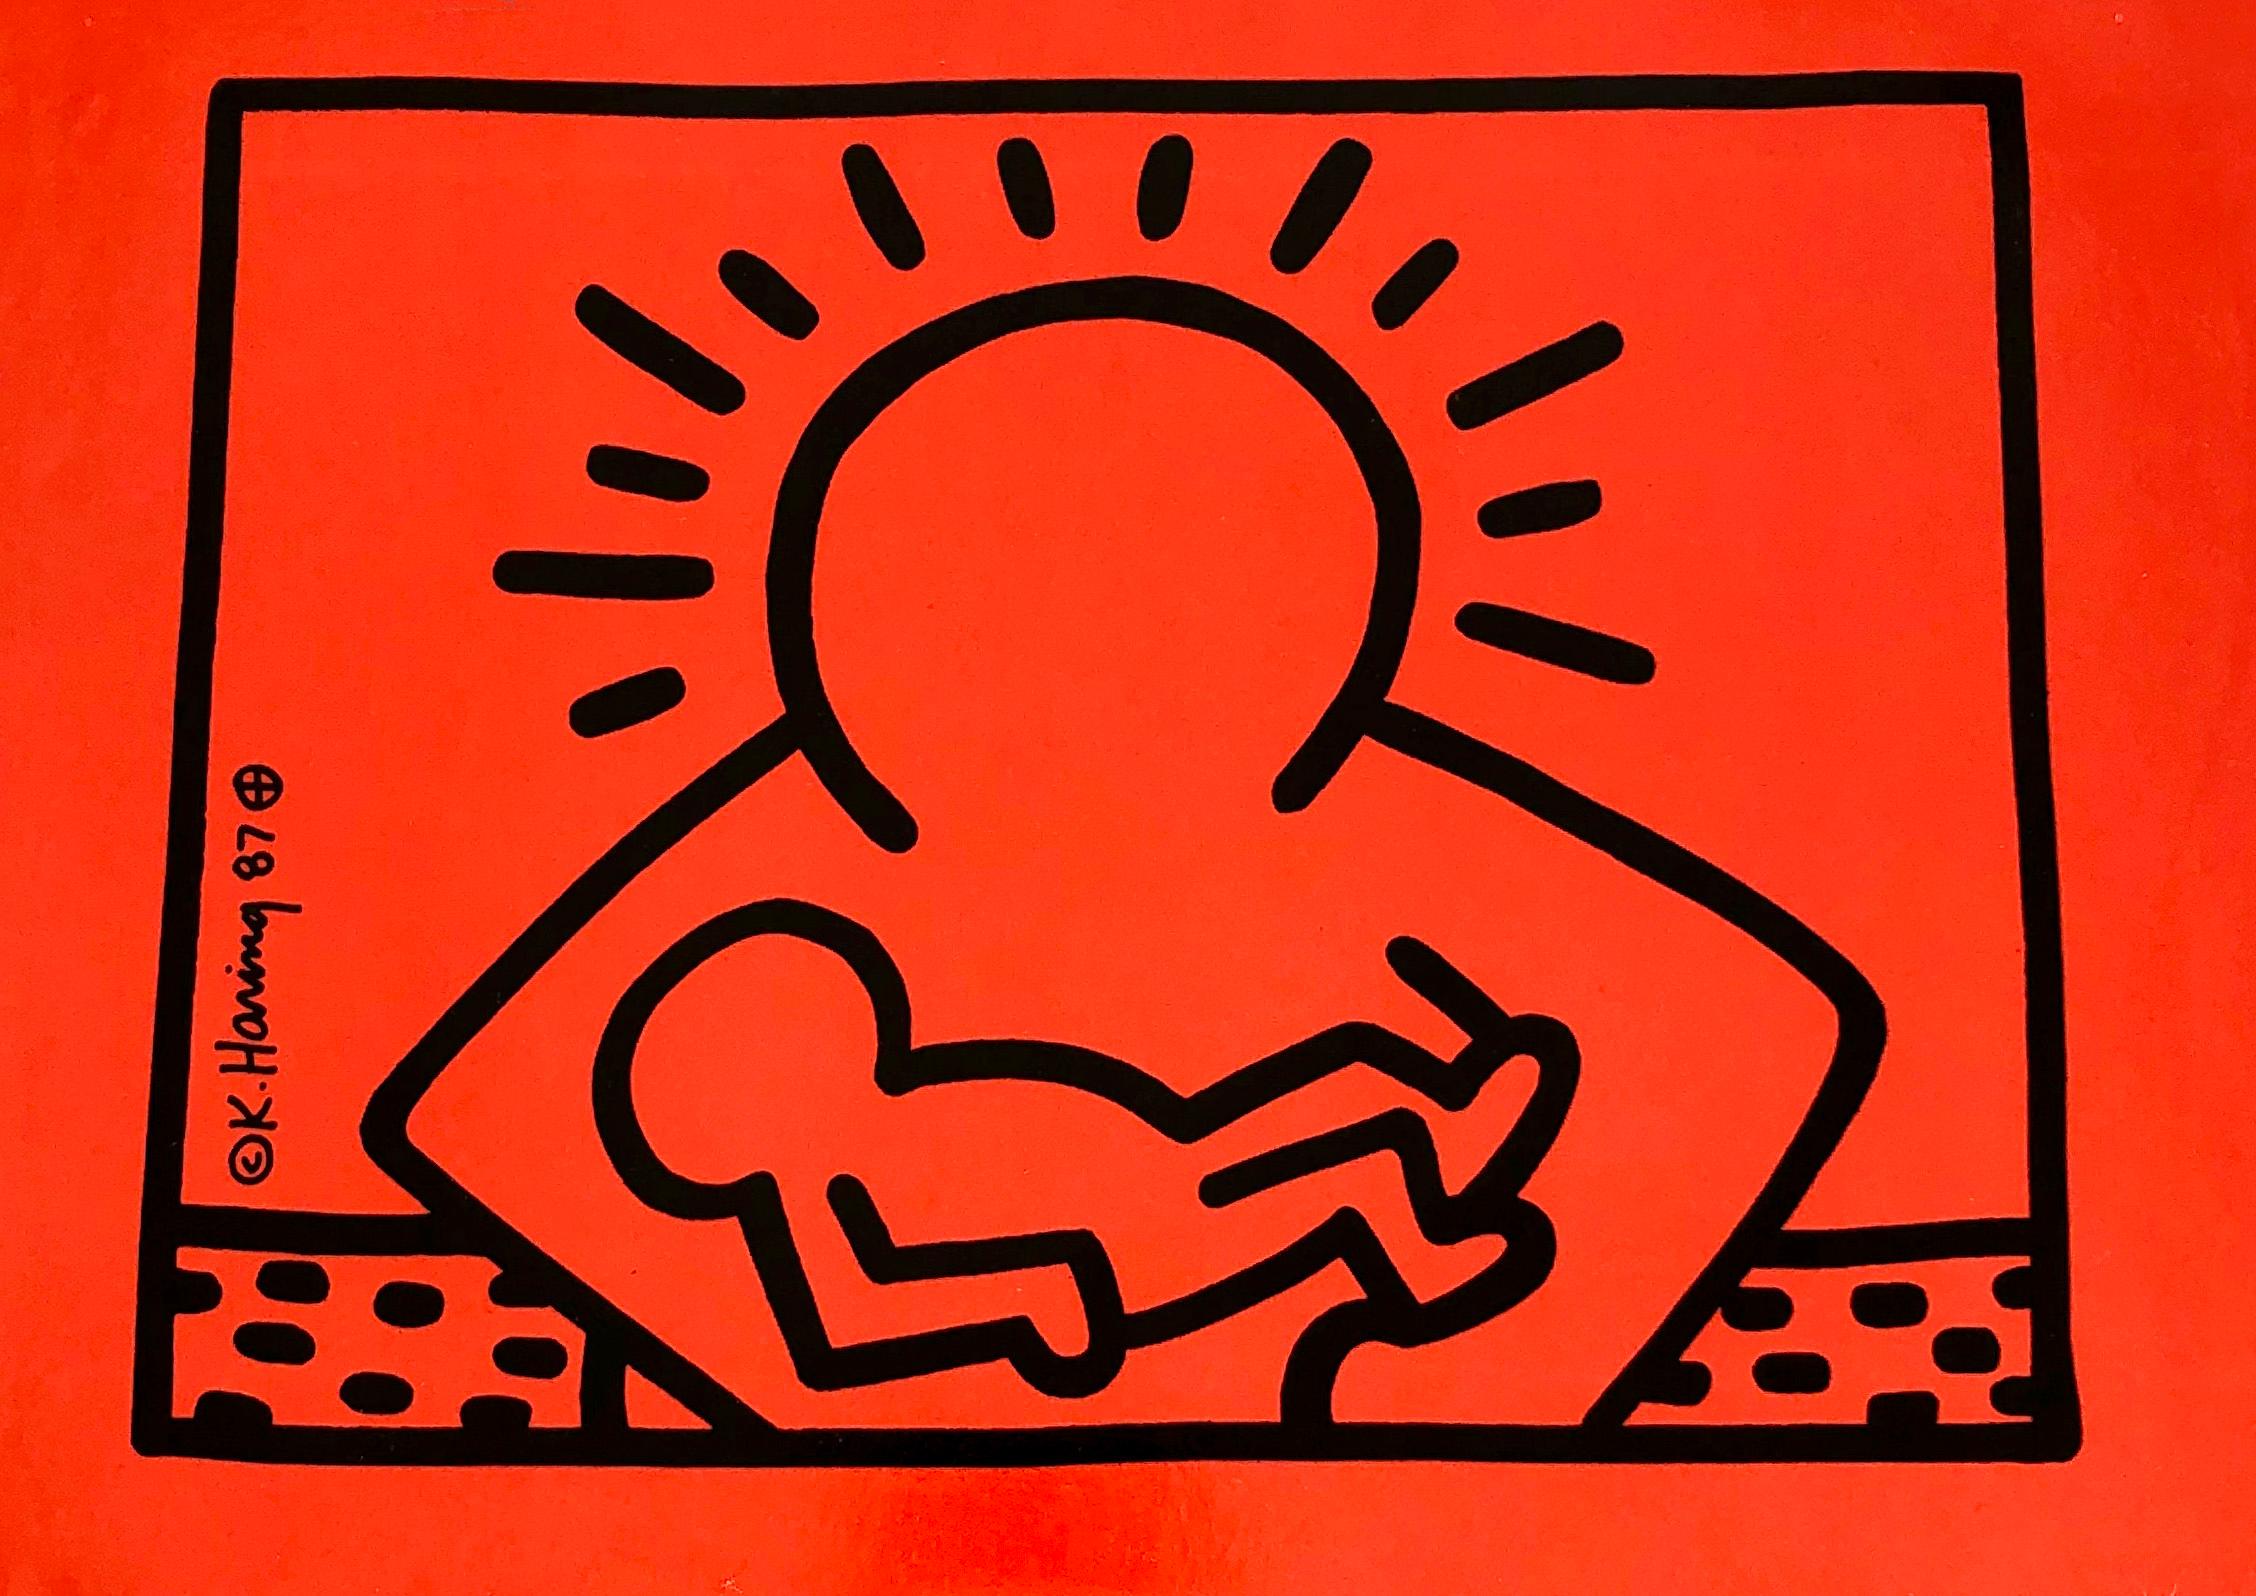 Keith Haring, Run DMC Christmas:
Super rare sought-after Run DMC 